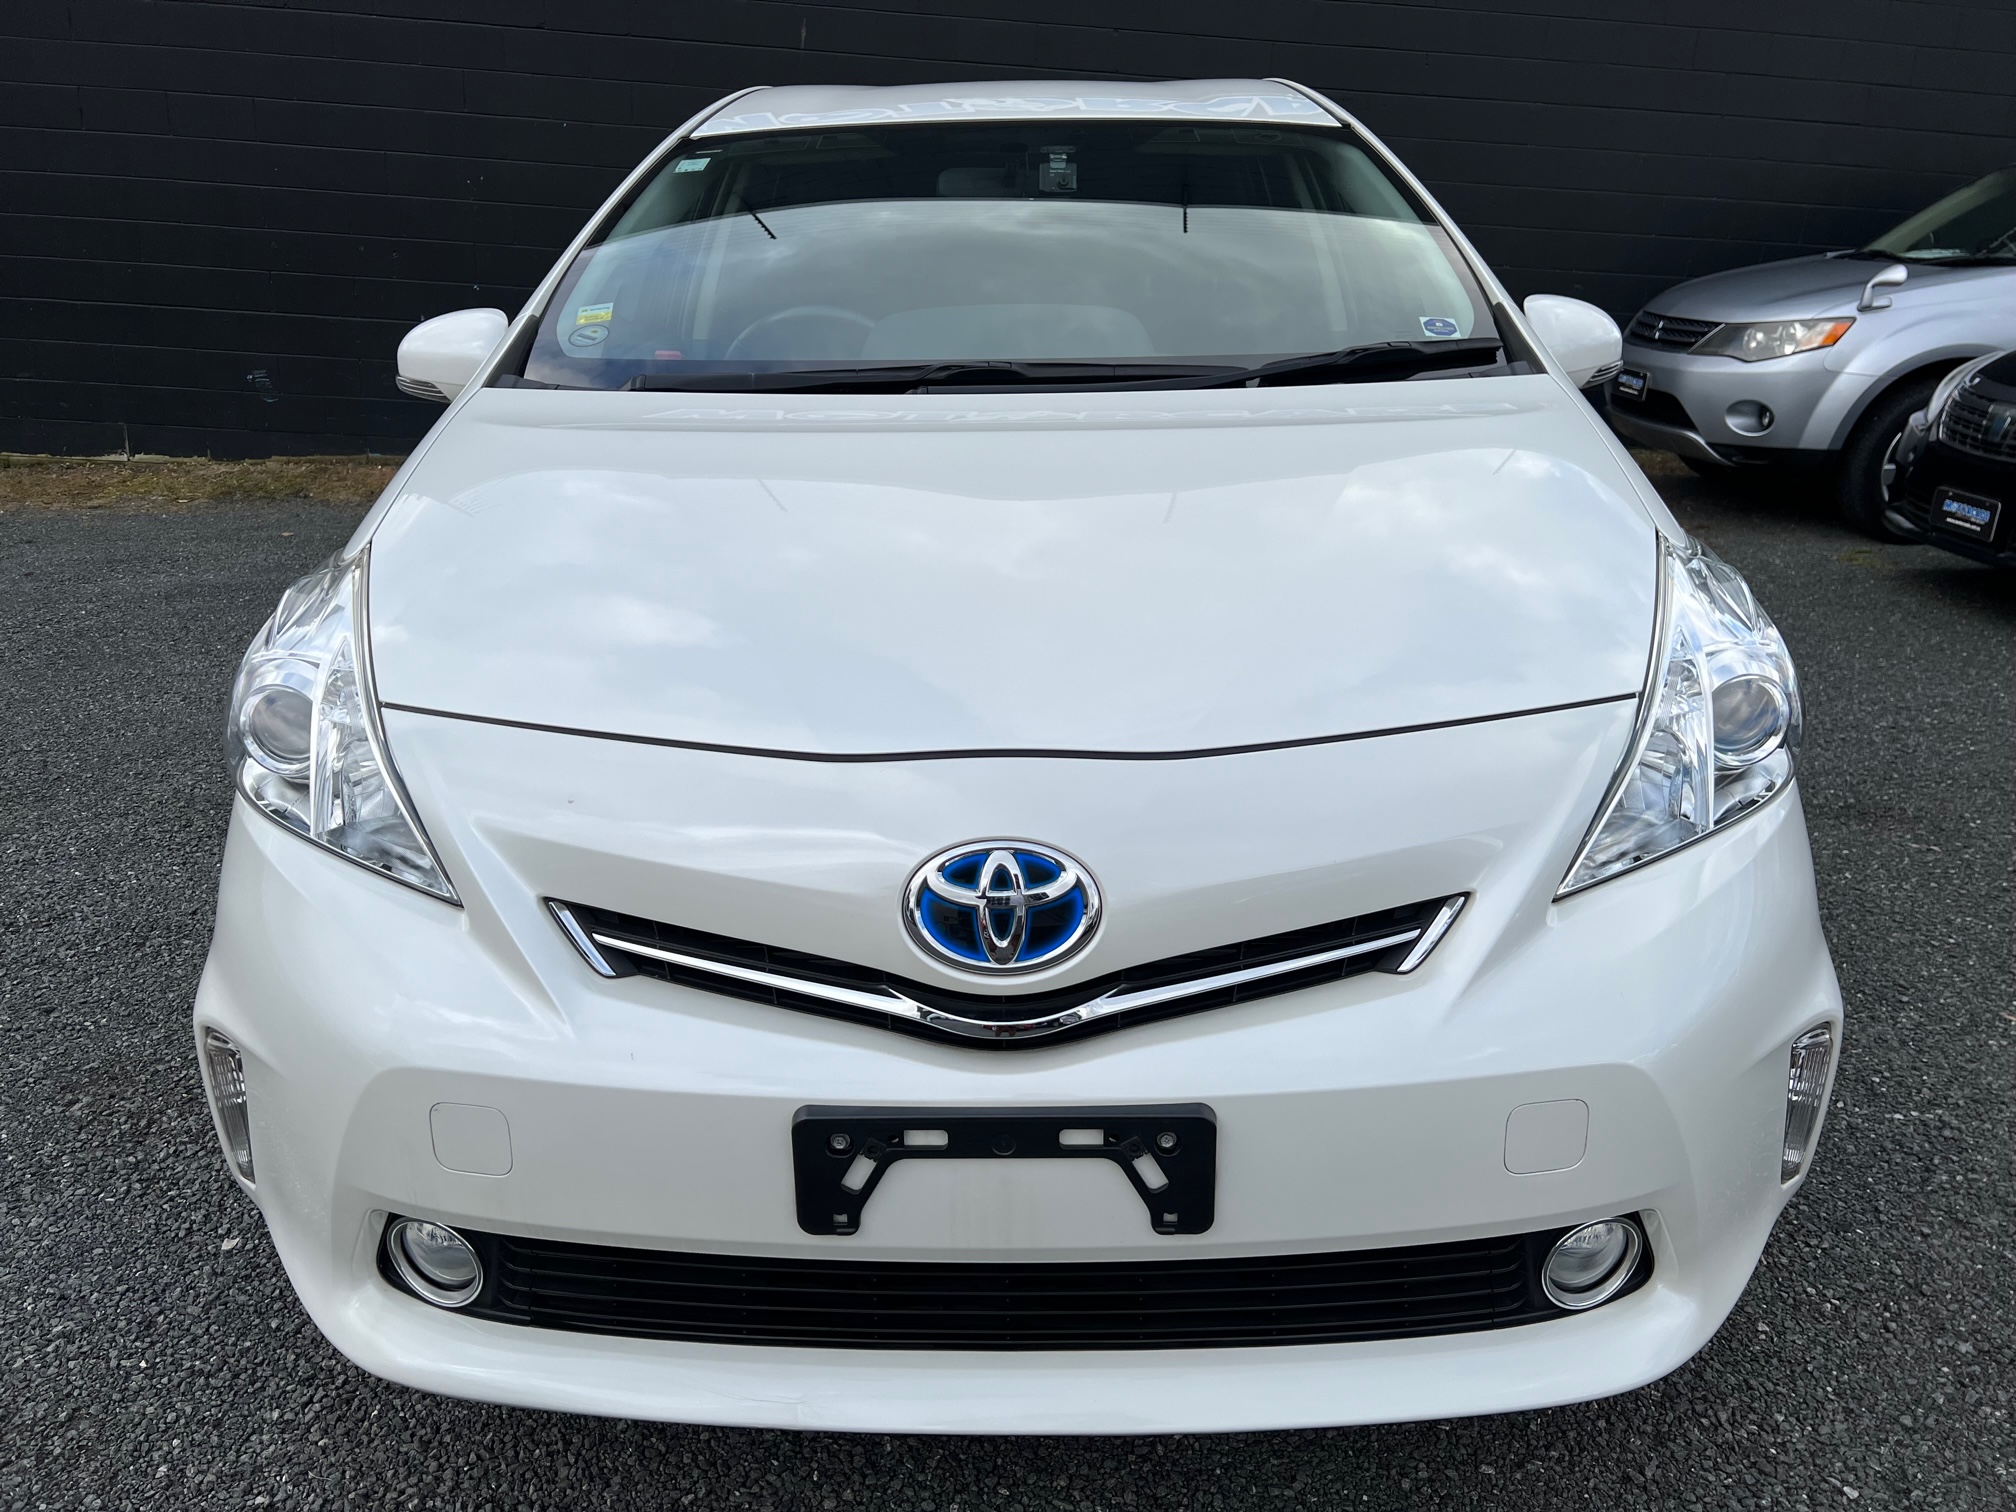 Toyota Alpha Prius 2014 Image 3